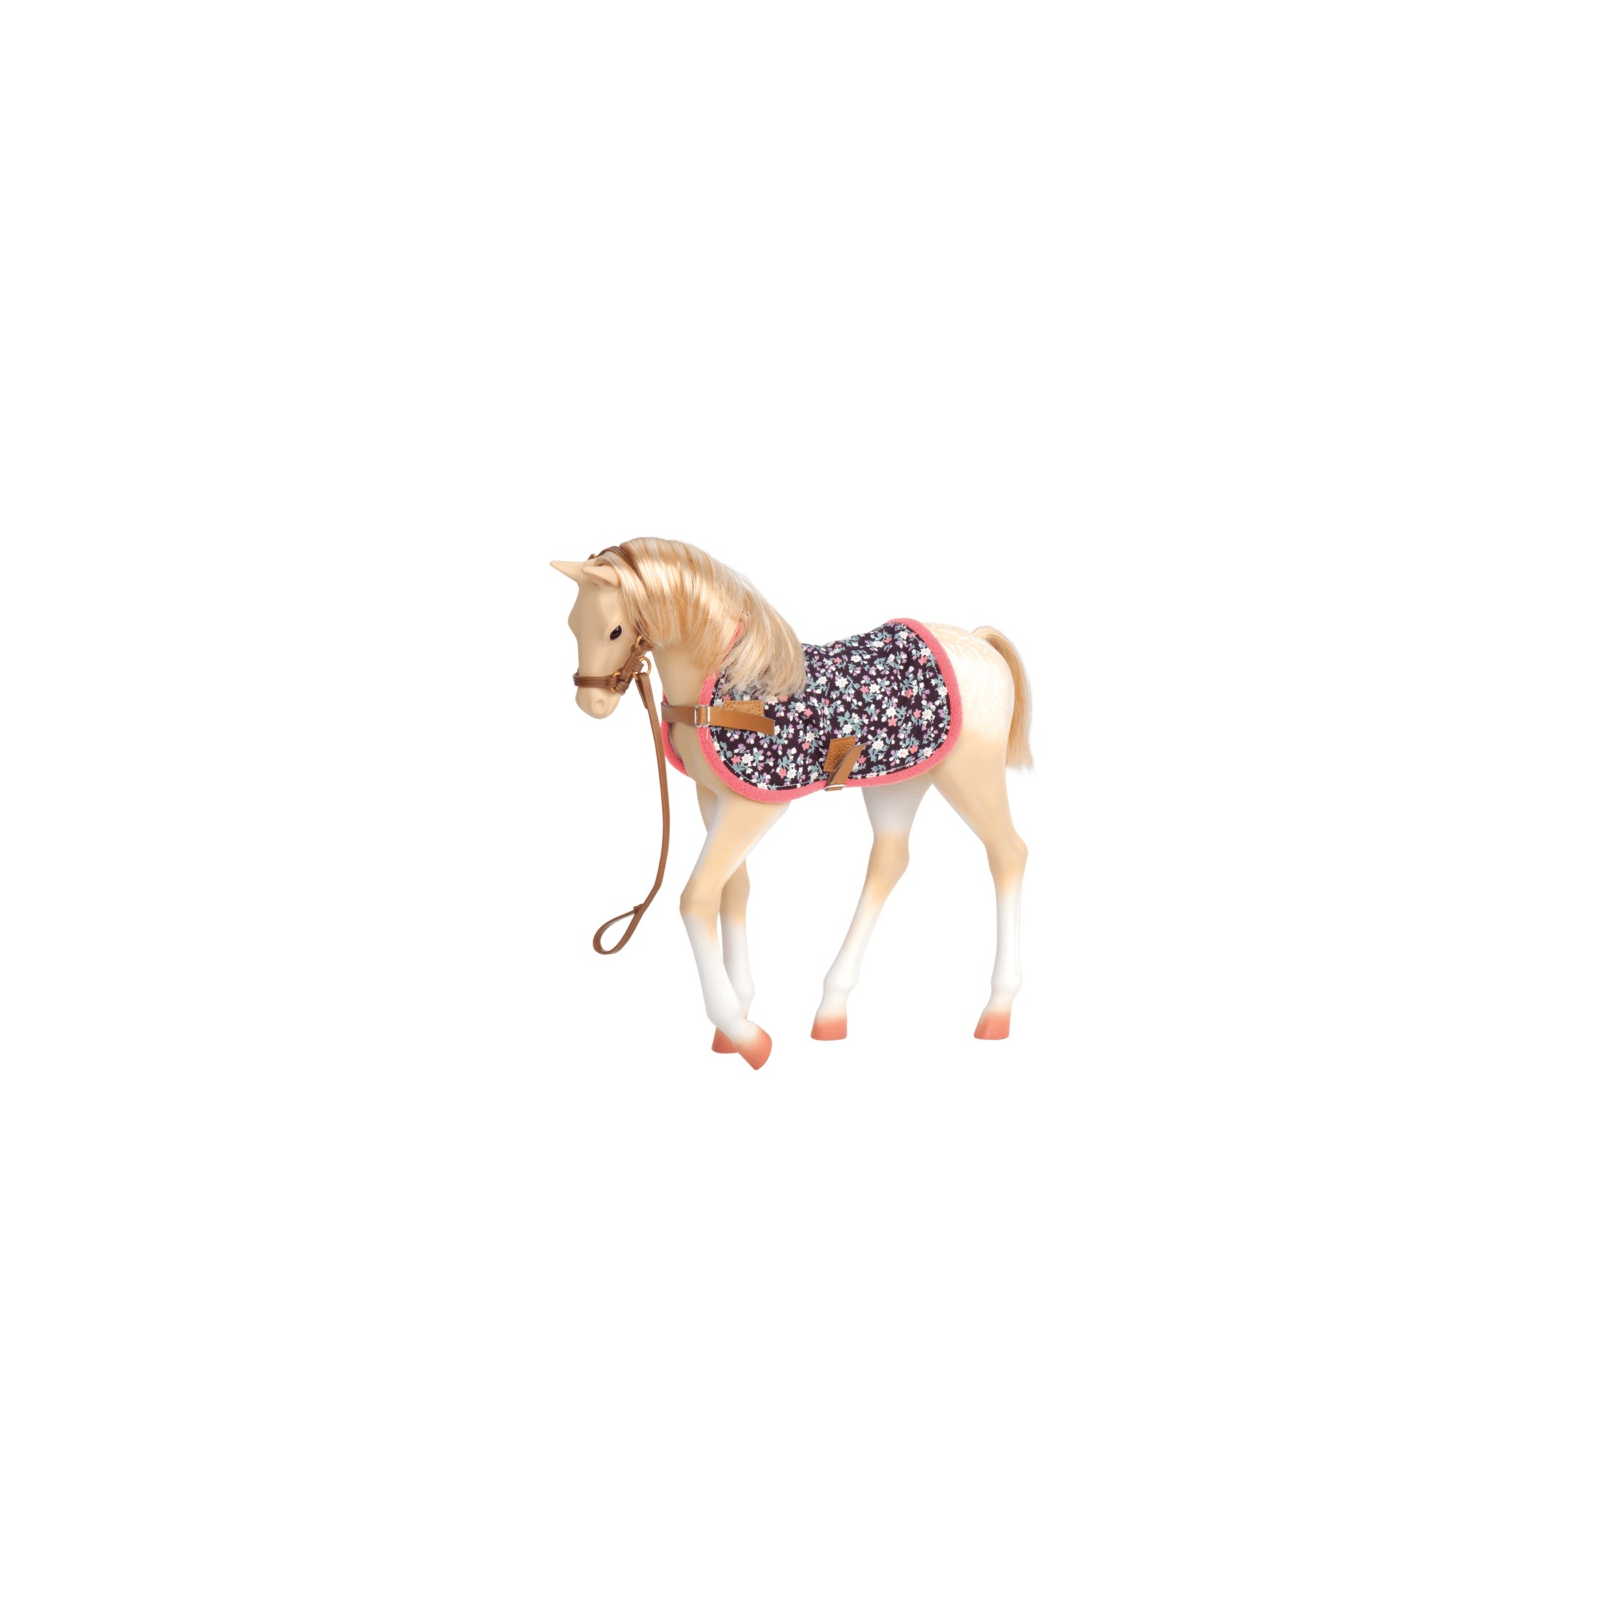 Аксесуар до ляльки Our Generation Лошадь Скарлет с аксессуарами 26 см (BD38012Z)